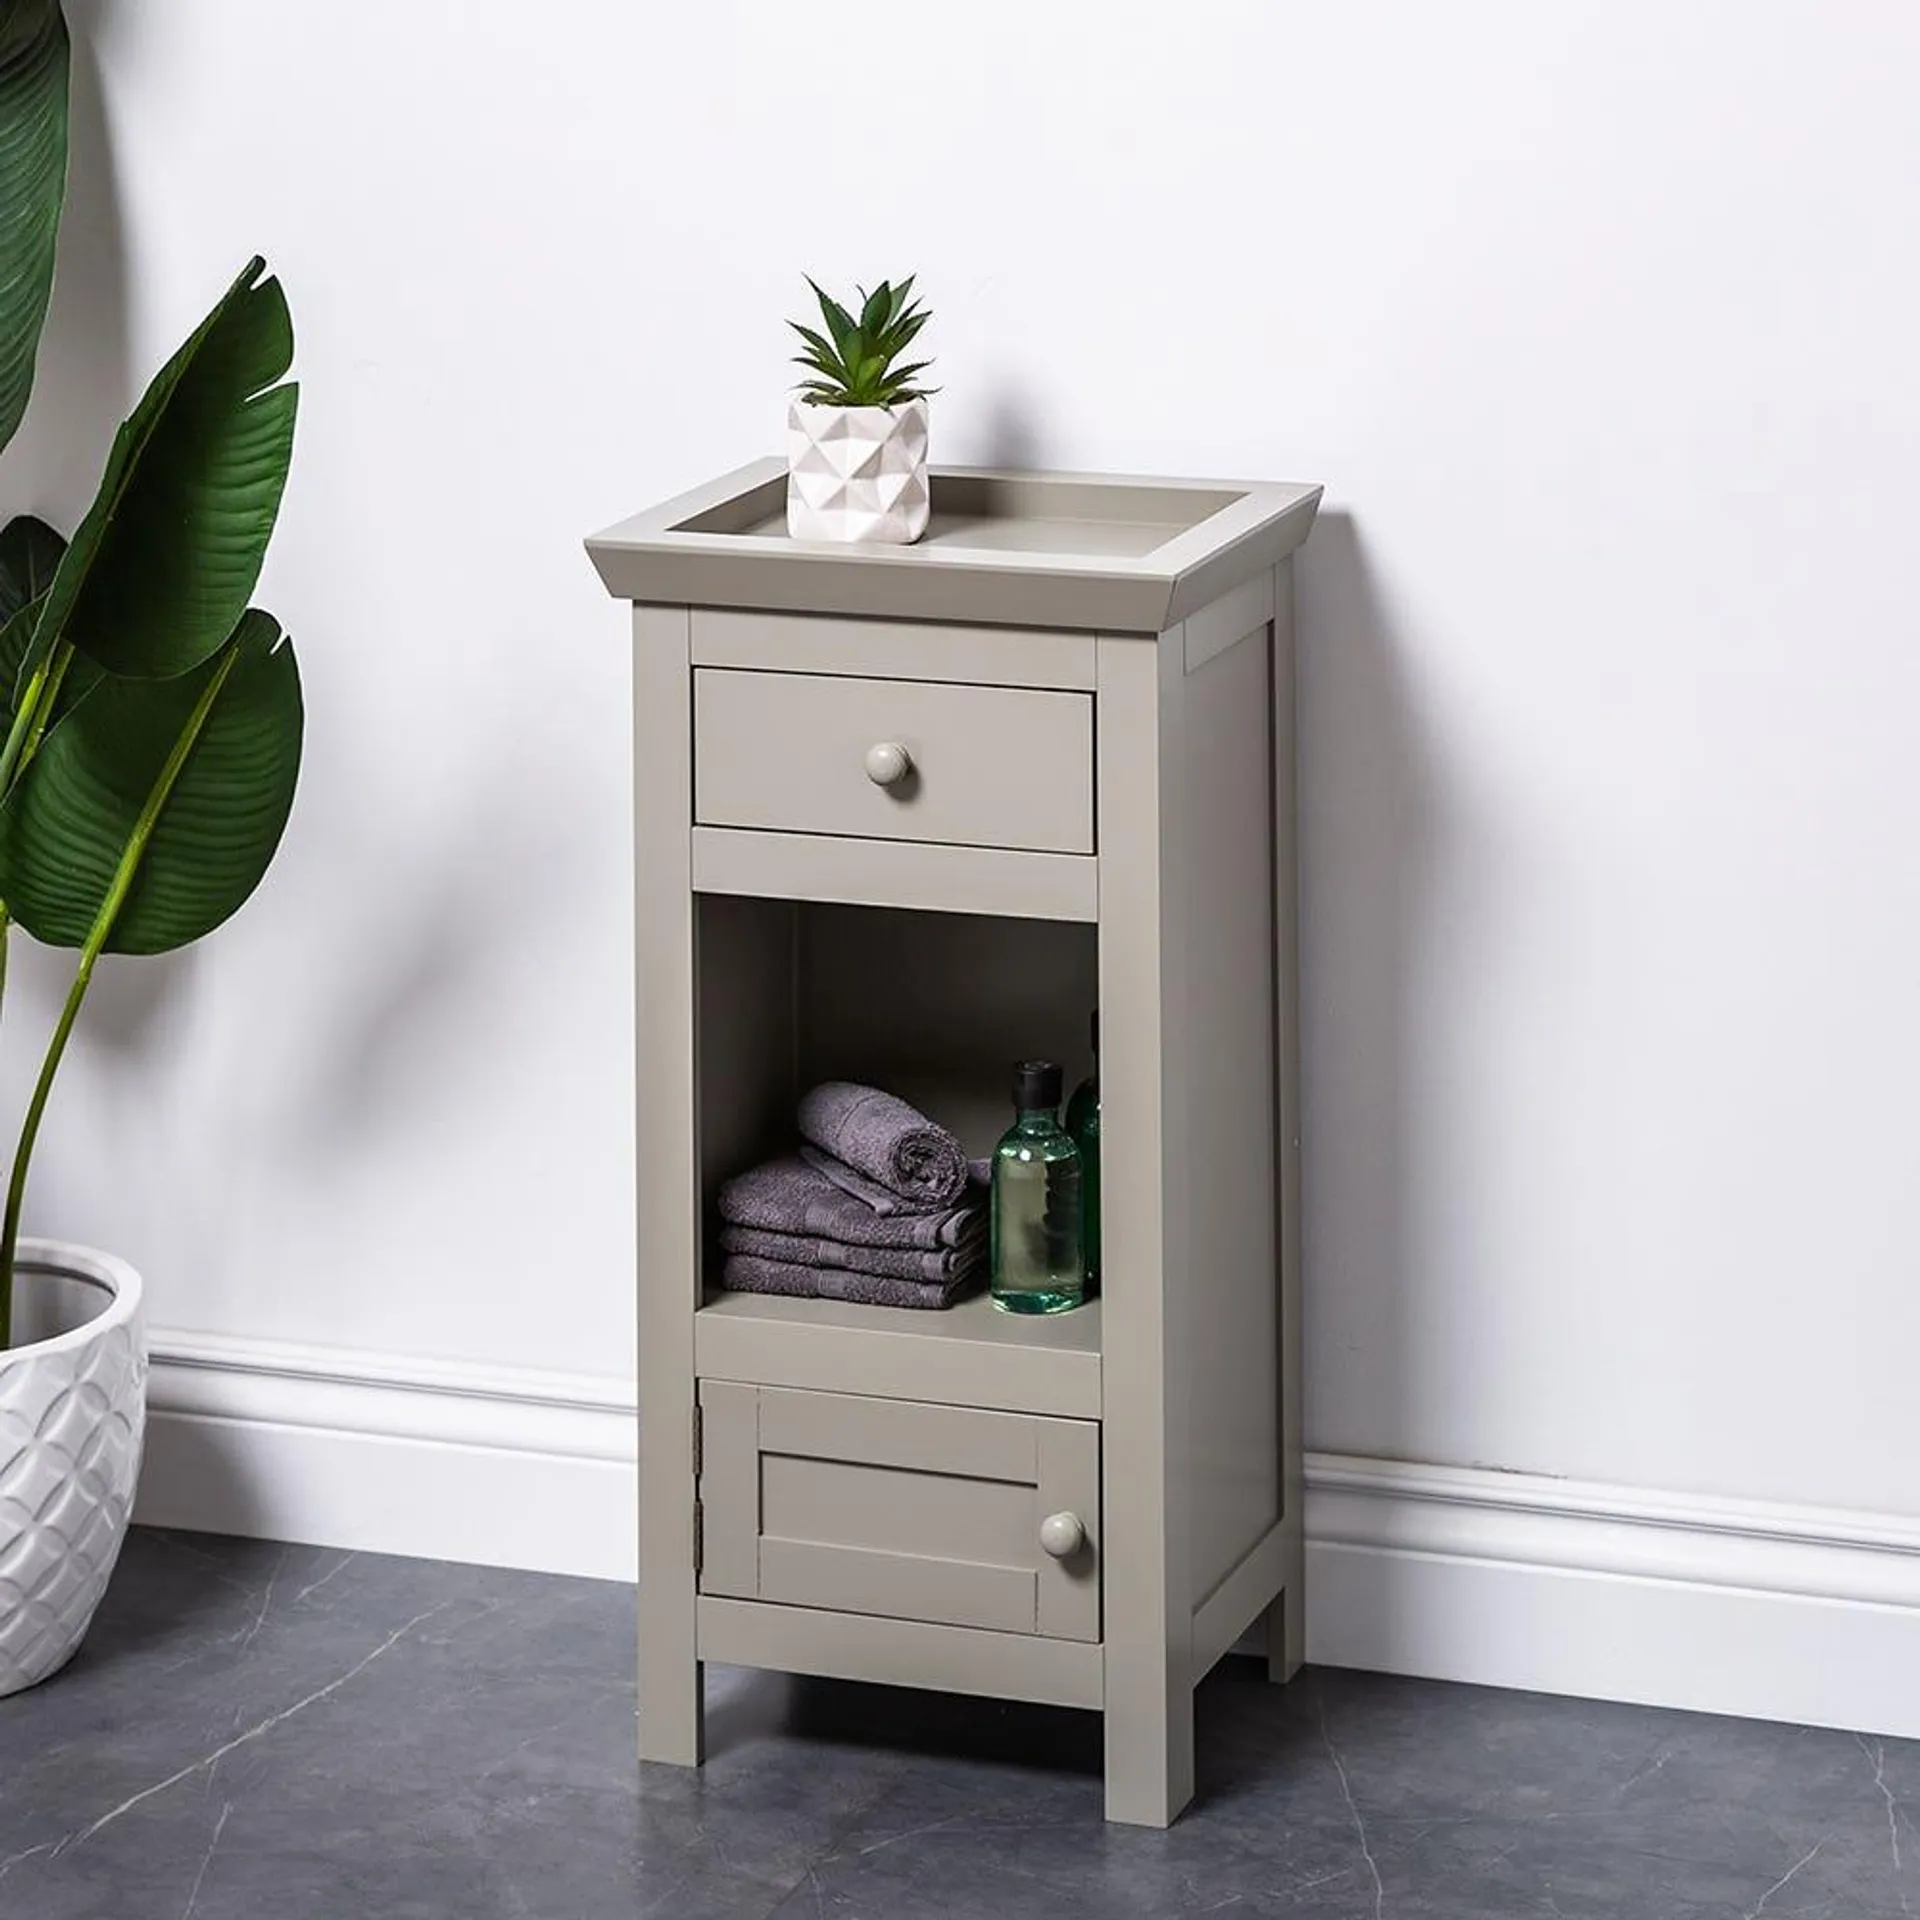 KSP Tivoli Wood Towel Cabinet (Grey)